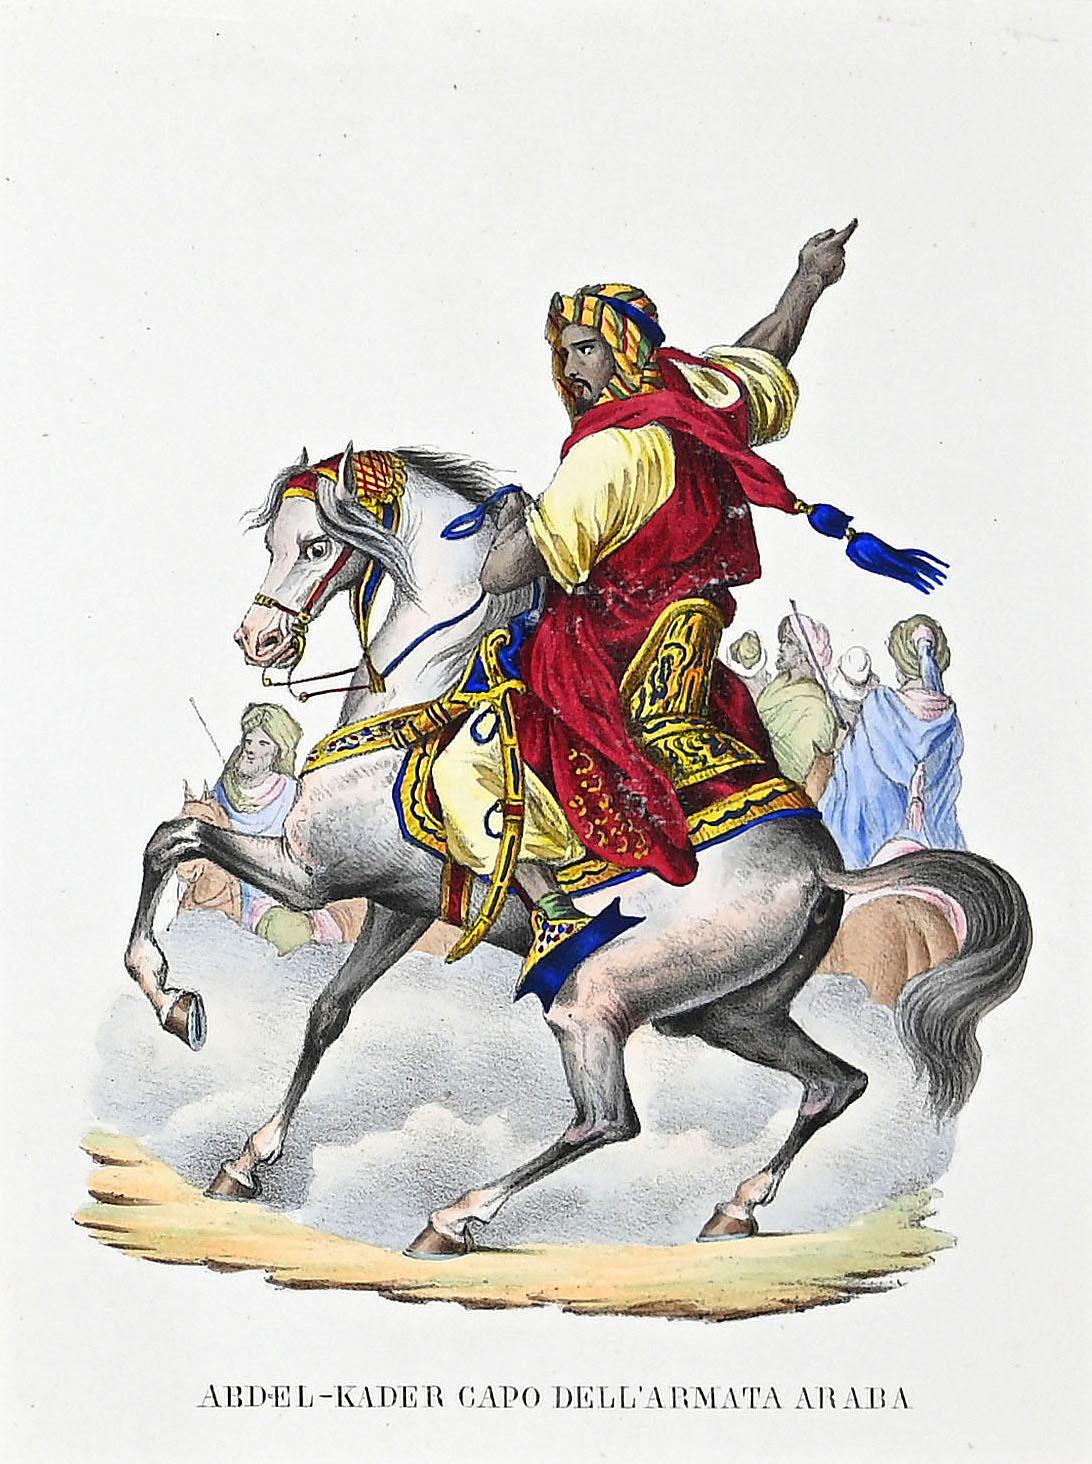 Leader of the Arab army - Original Watercolor Lithograph - 1848 ca.